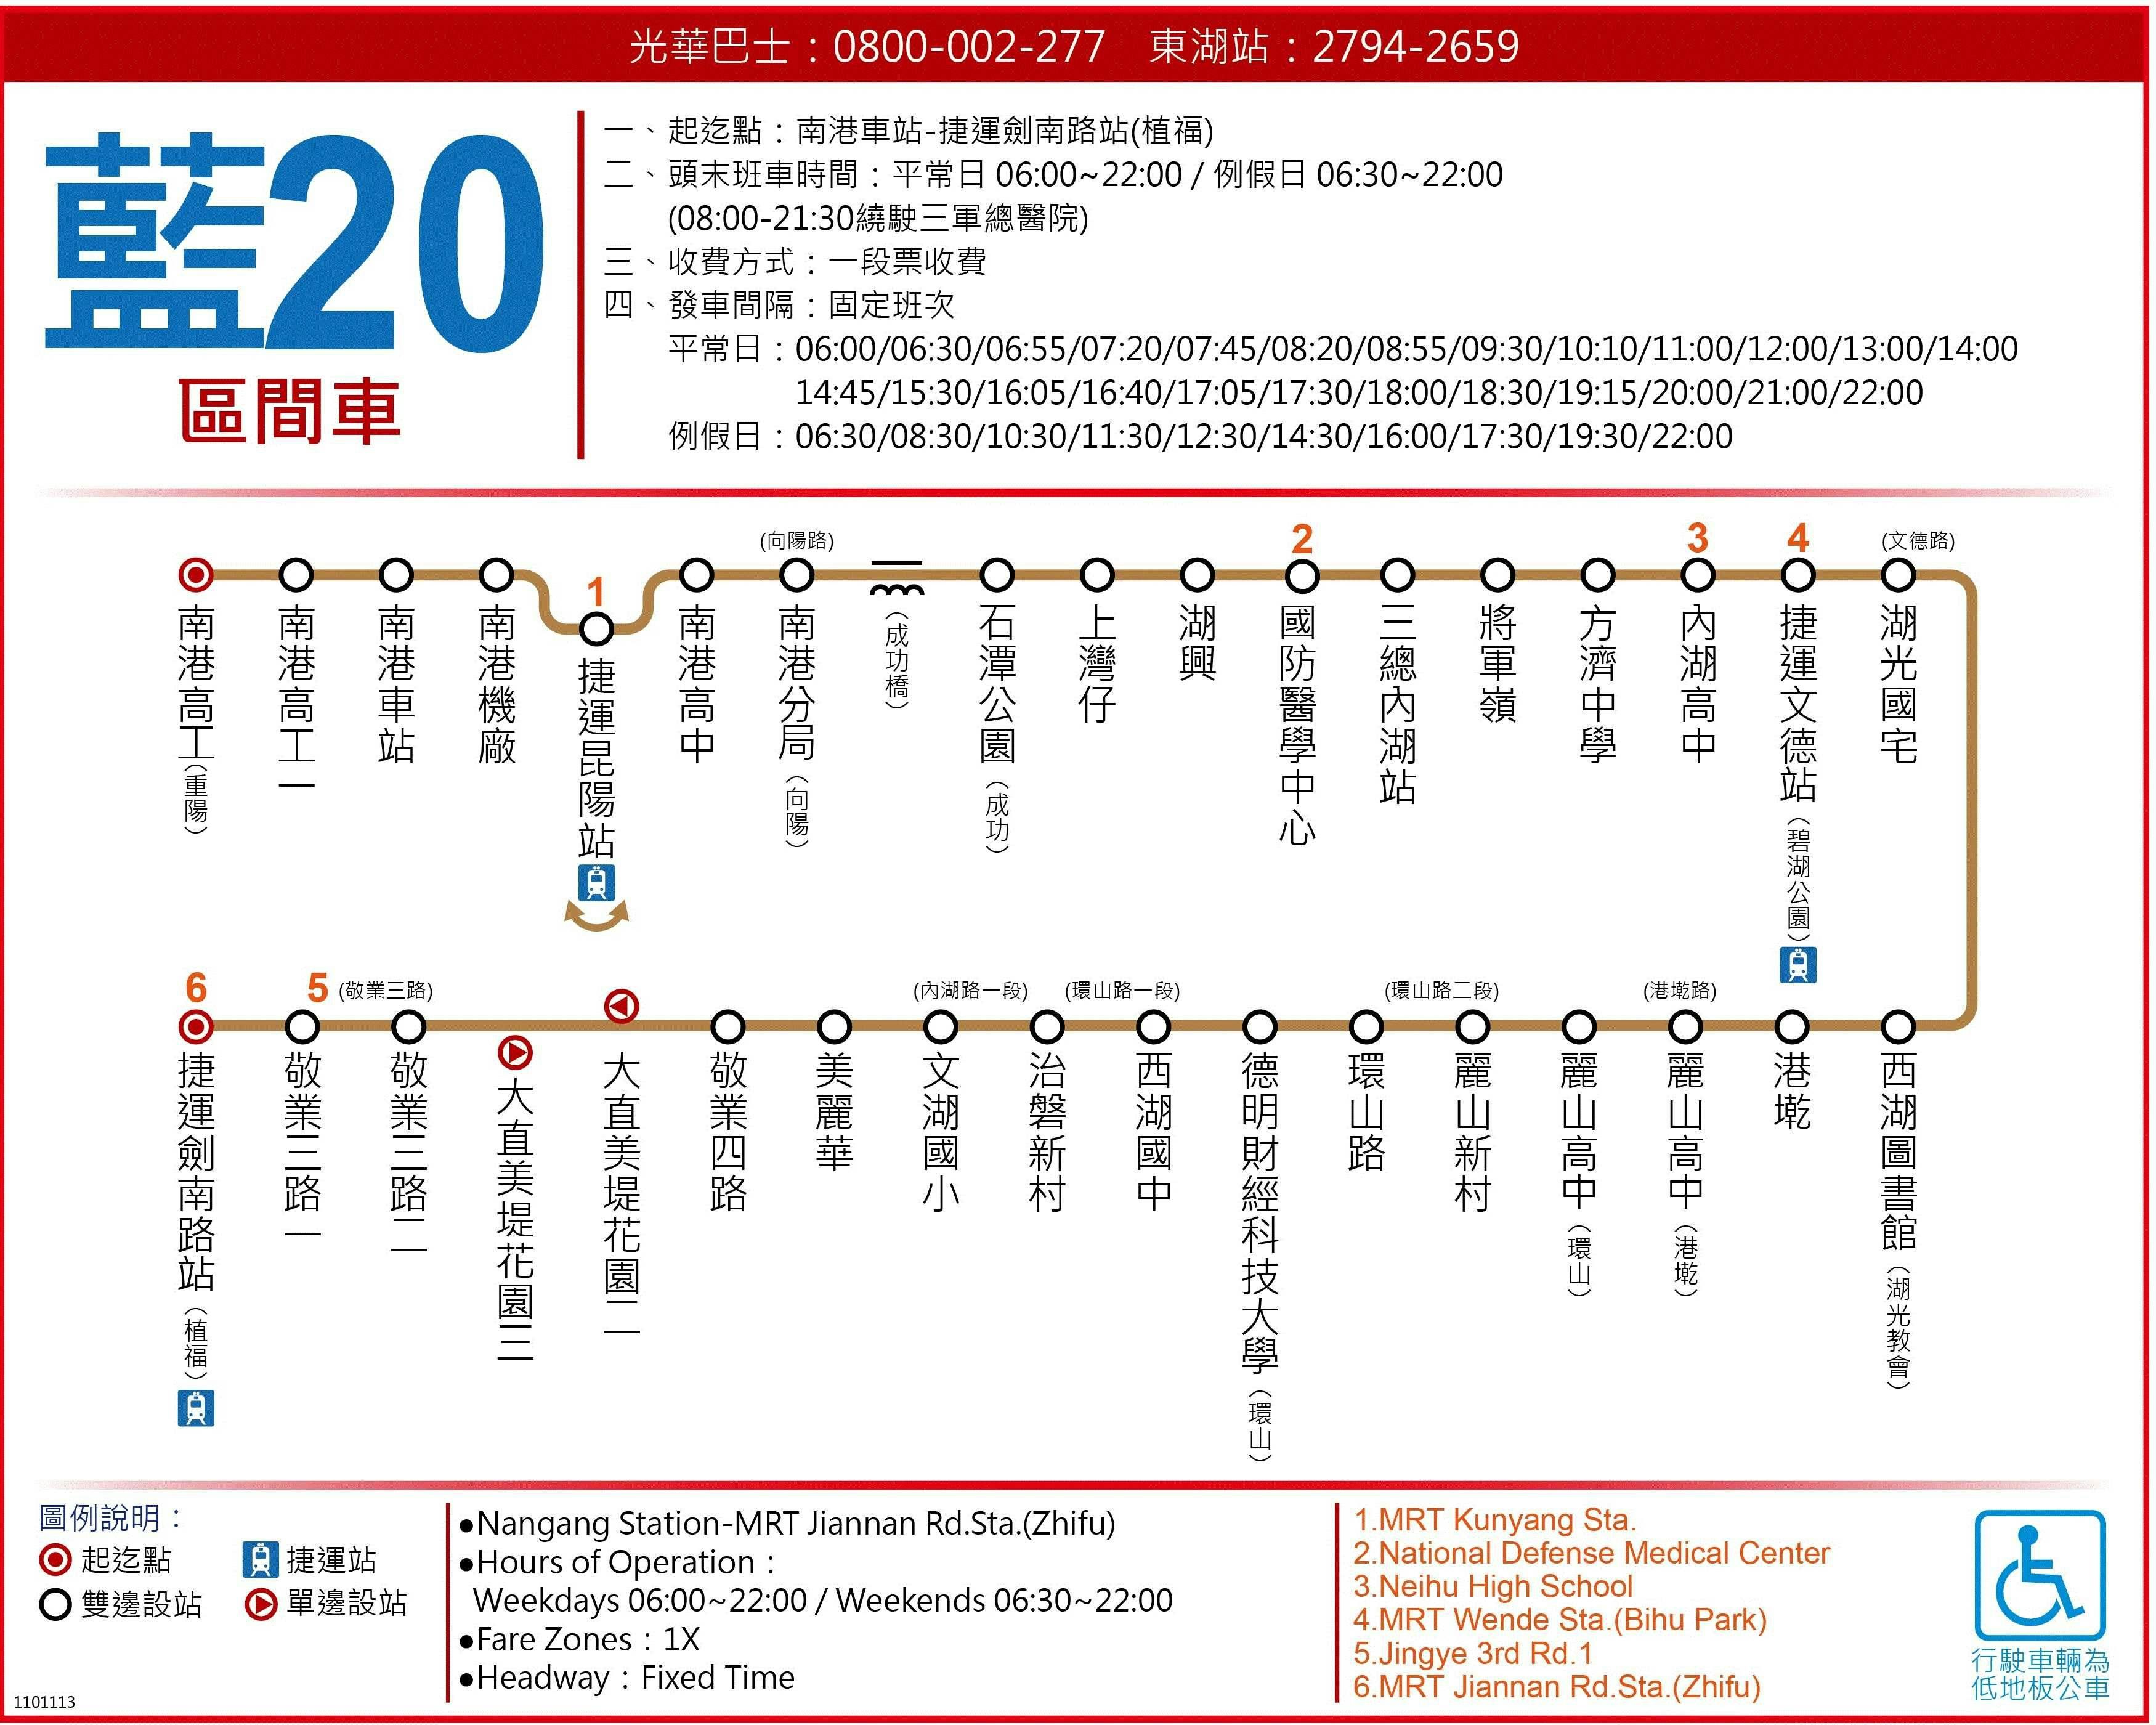 BL20 ShuttleRoute Map-台北市 Bus